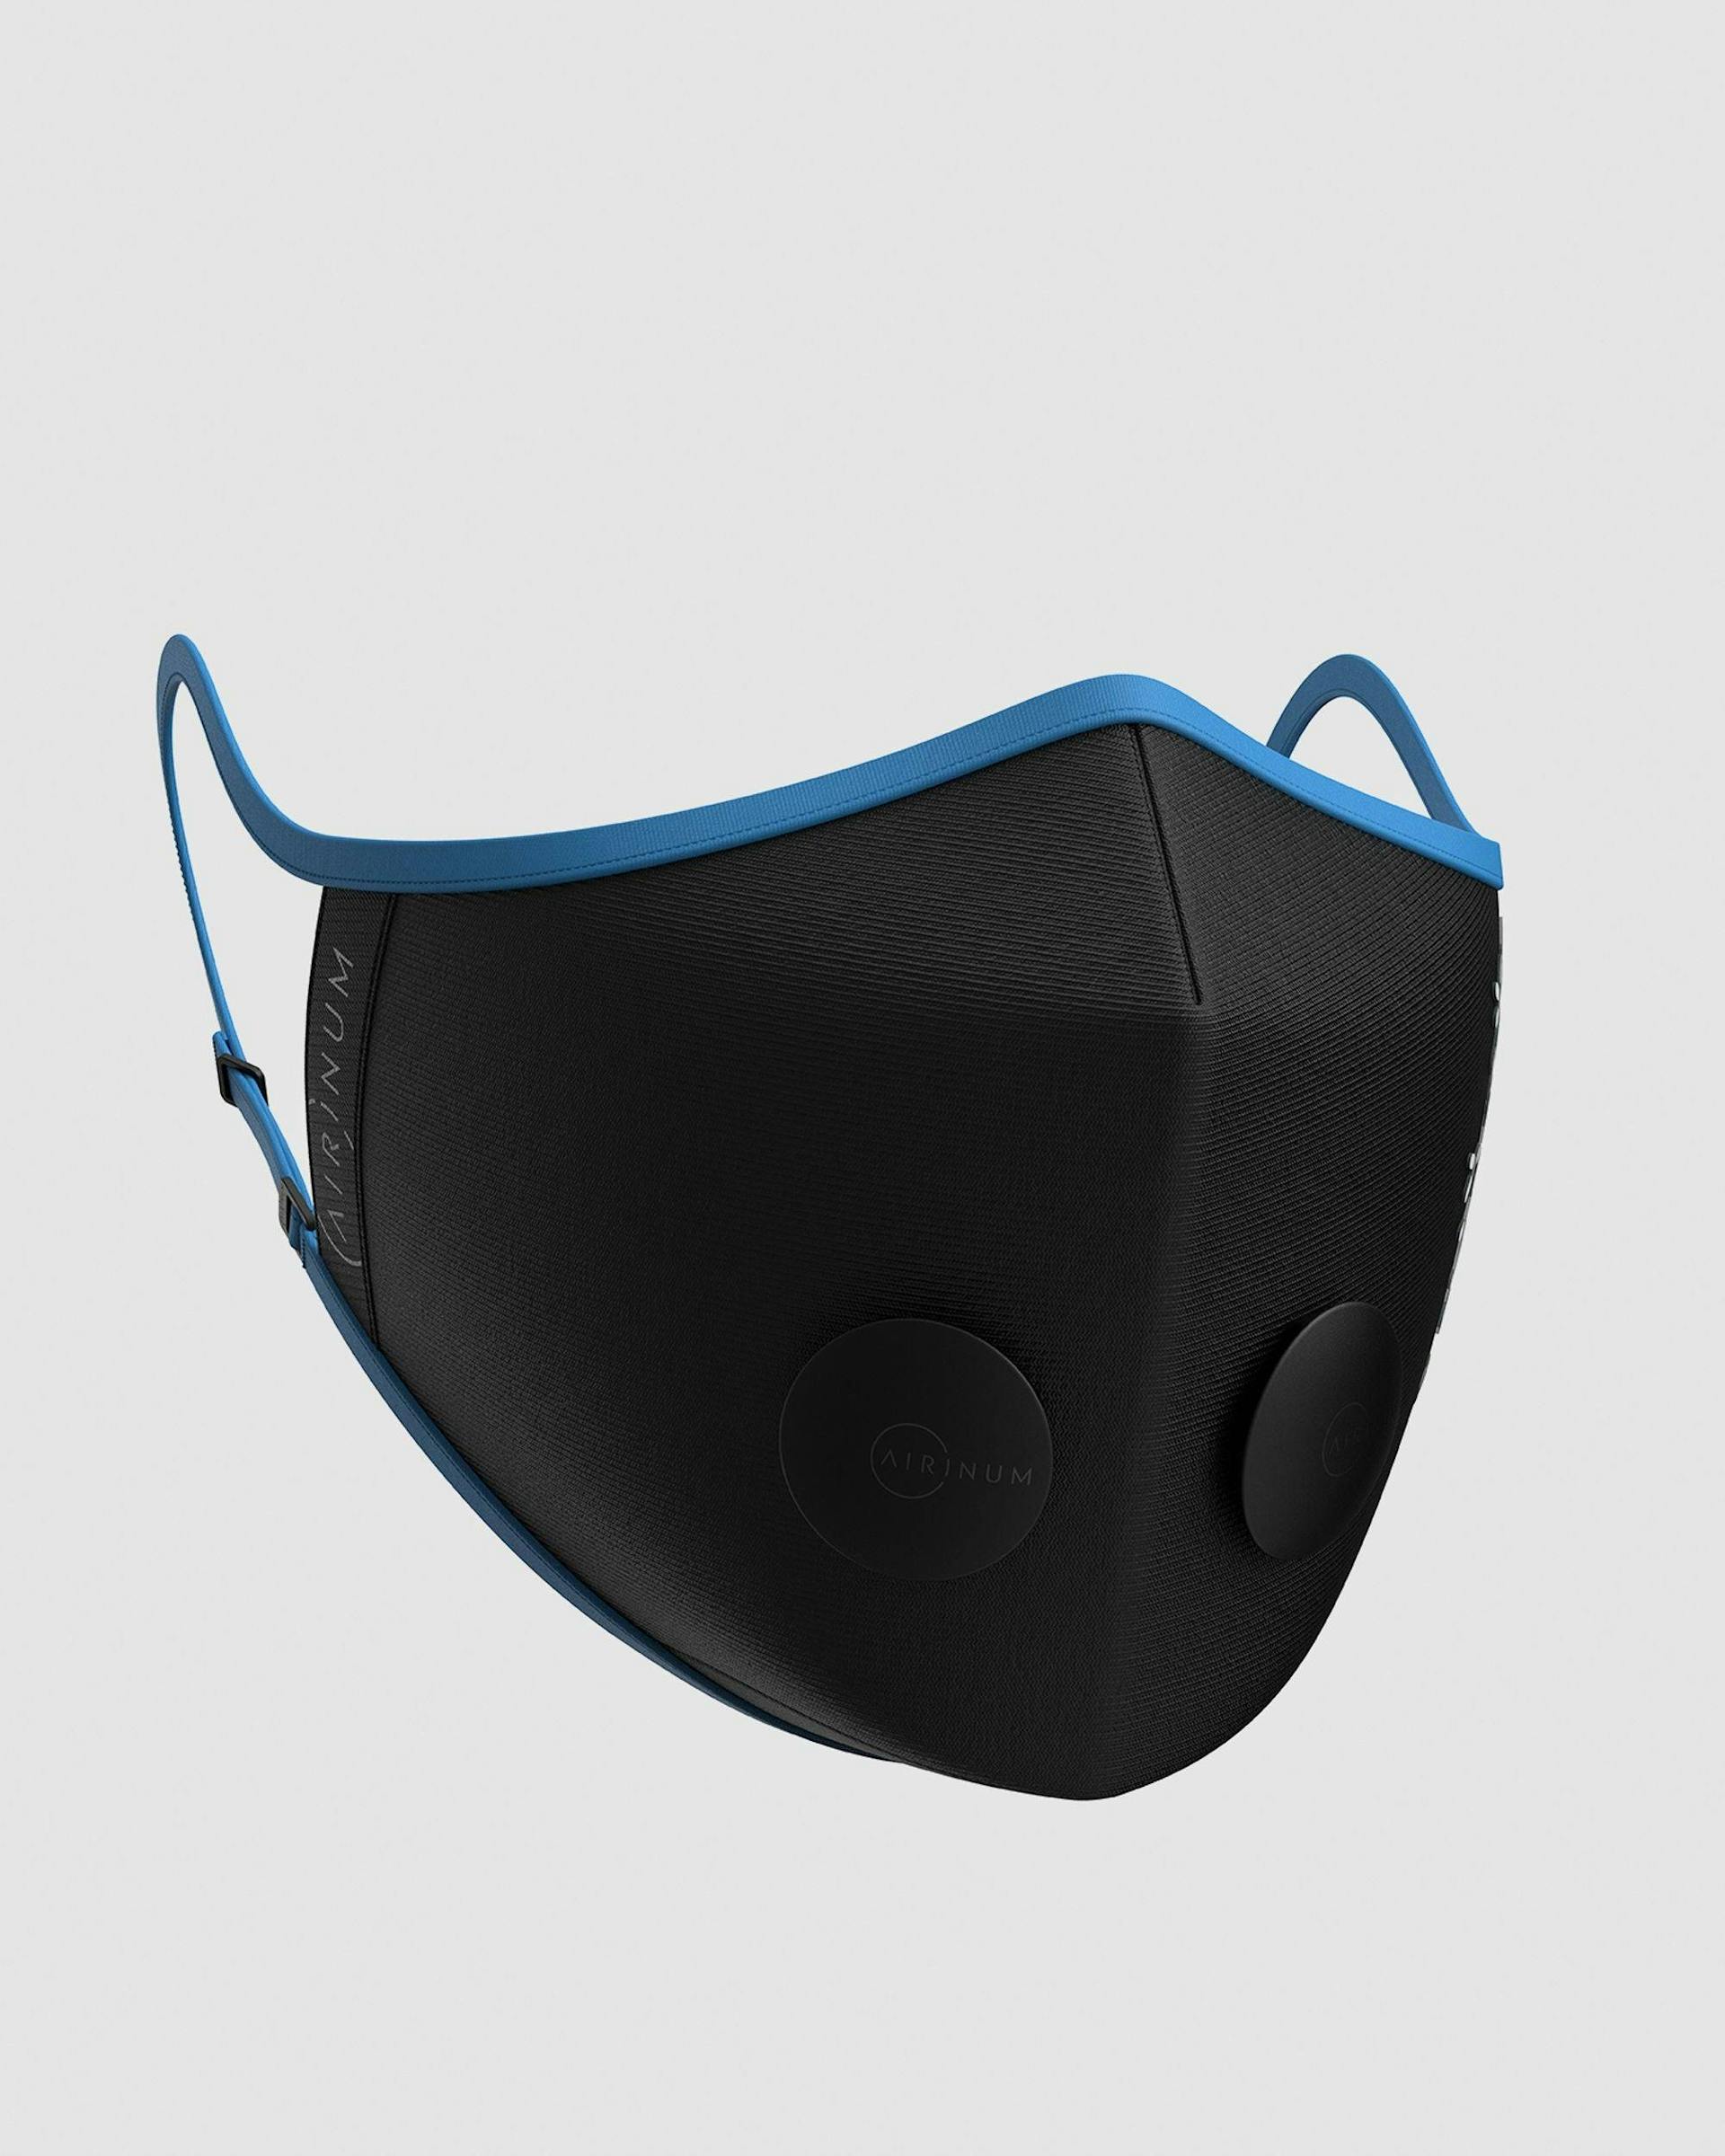 Masque Fashion Air Accessoire En Polyester Noir Et Bleu - Homme - Bally - 02